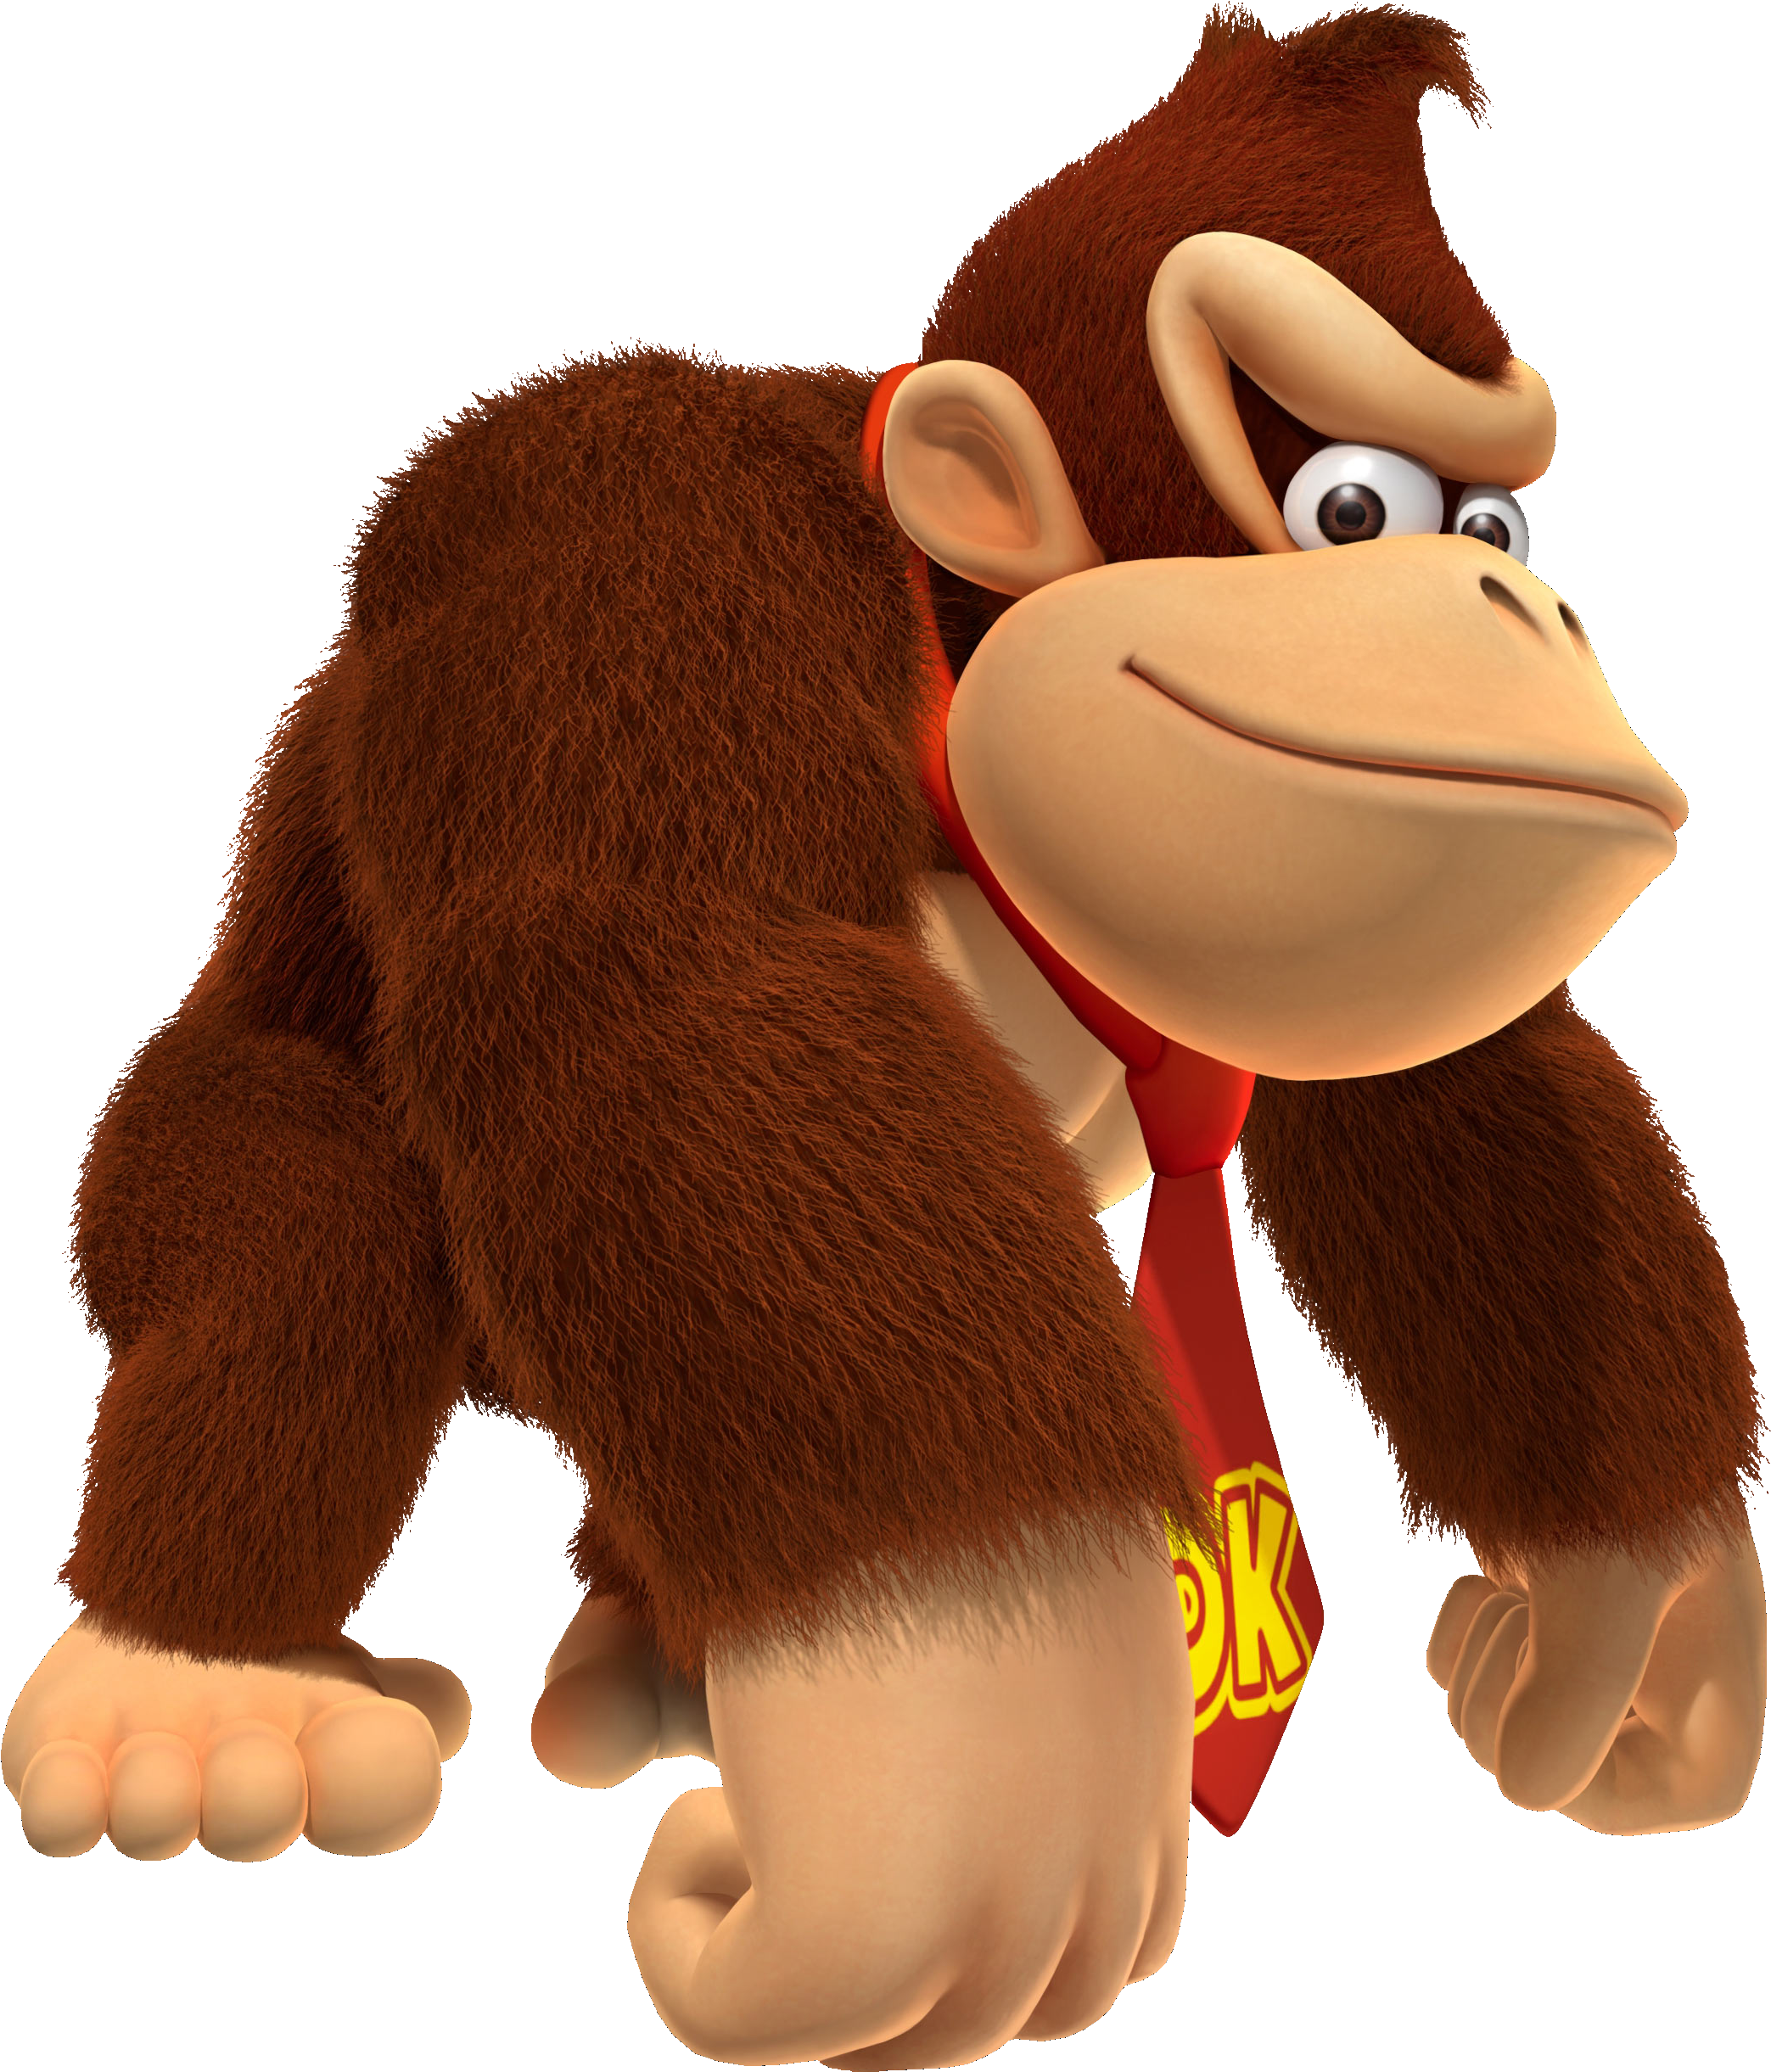 Donkey Kong Animated Character